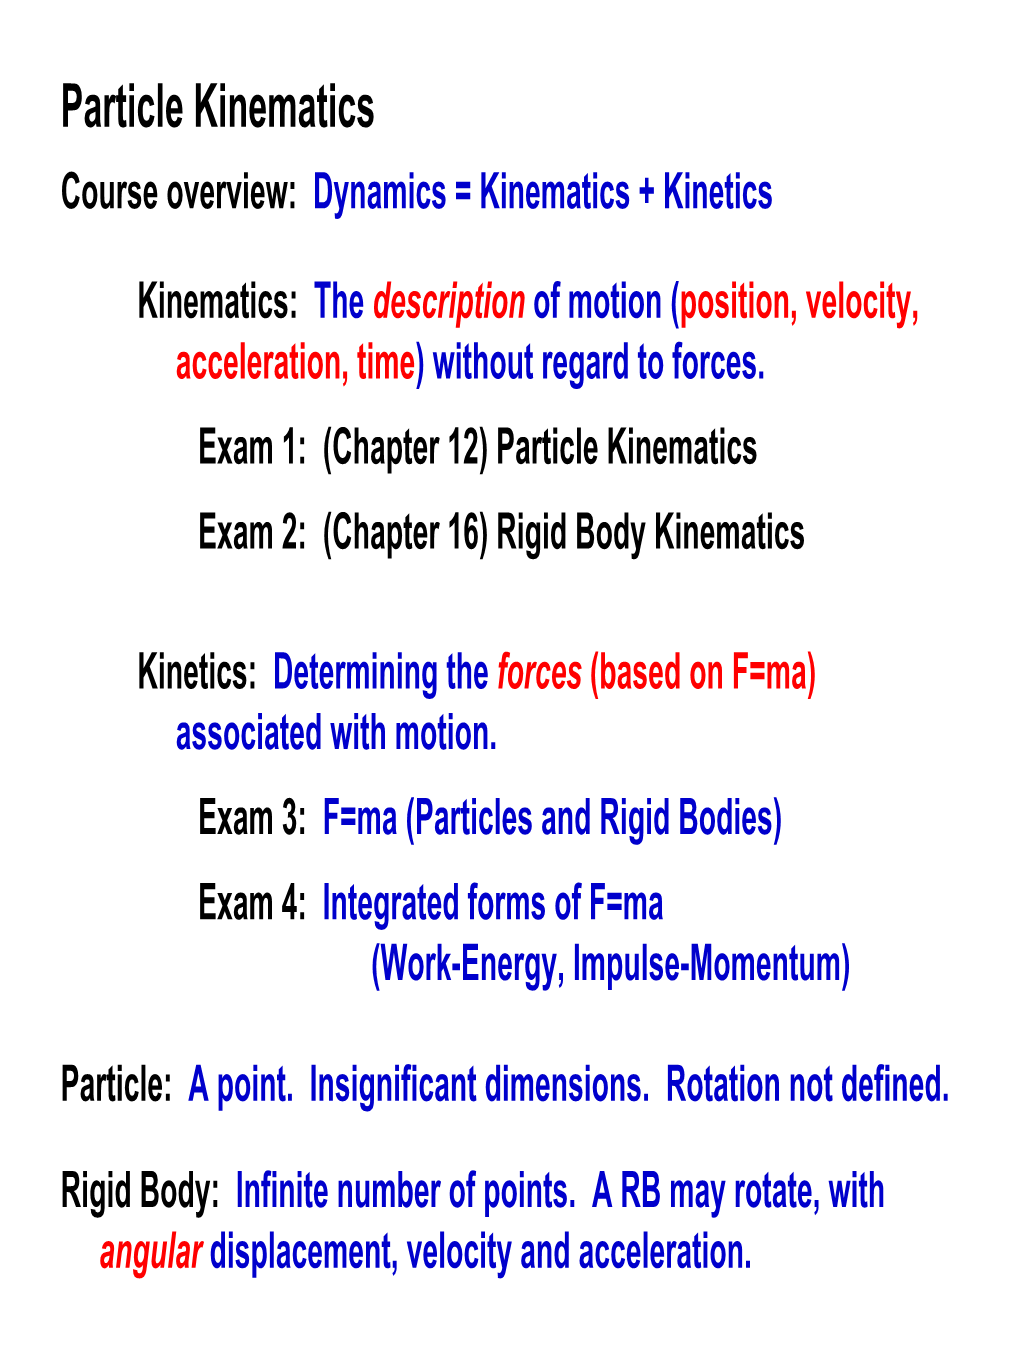 Particle Kinematics Course Overview: Dynamics = Kinematics + Kinetics